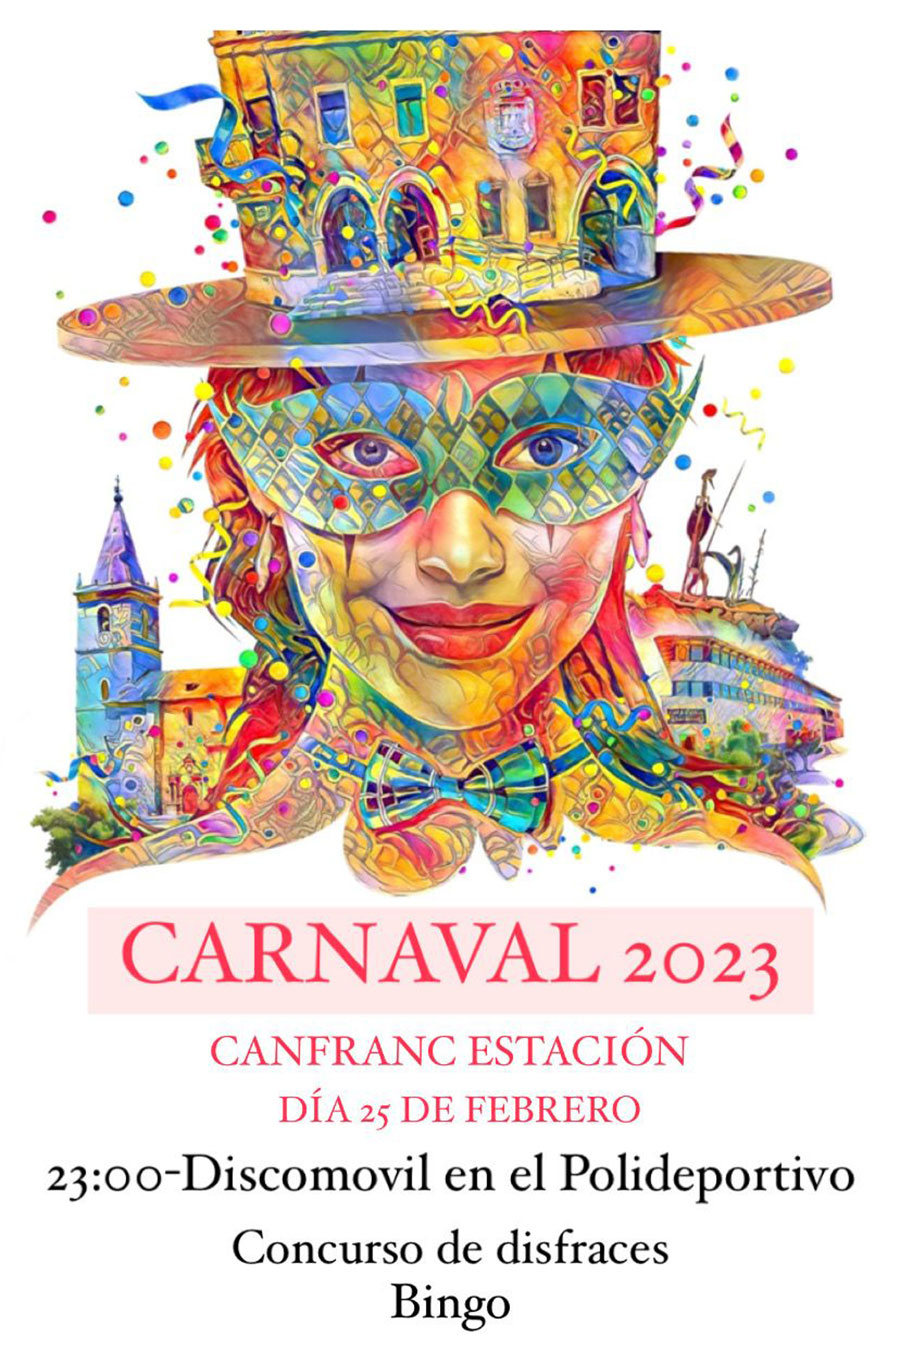 Carnaval 2023 en Canfranc